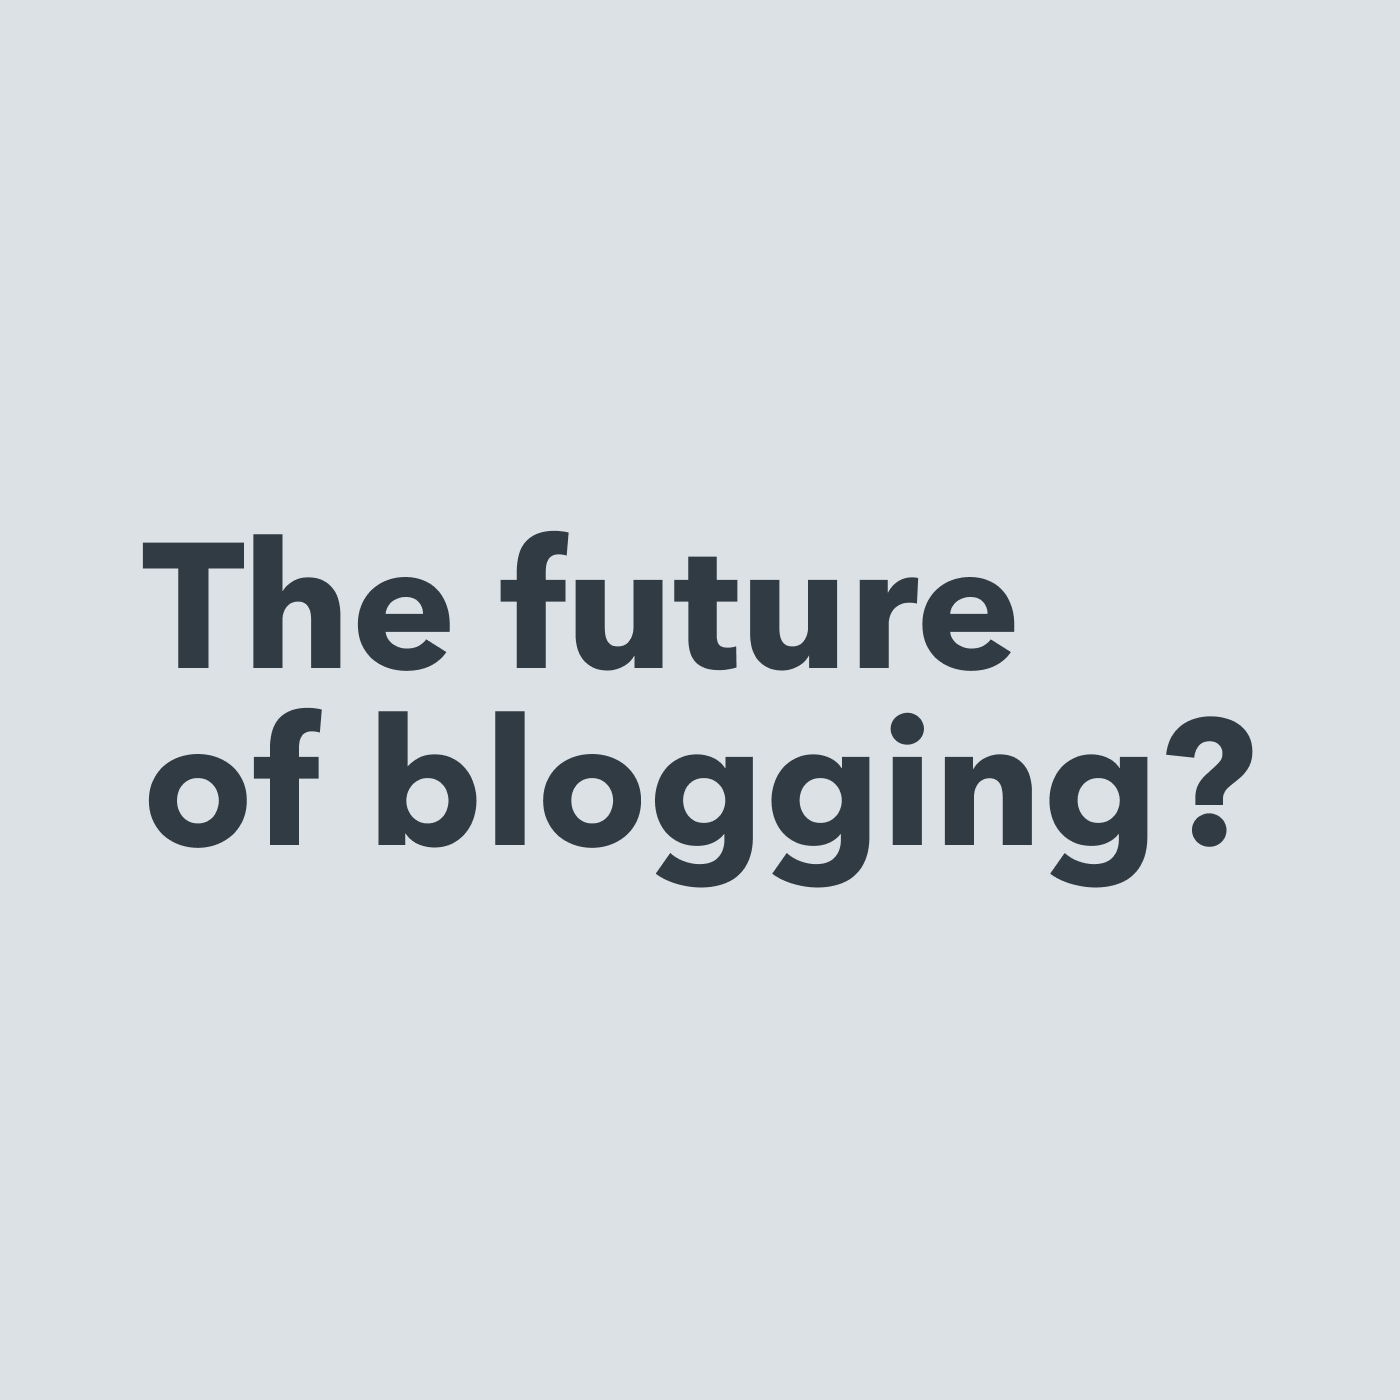 The future of blogging